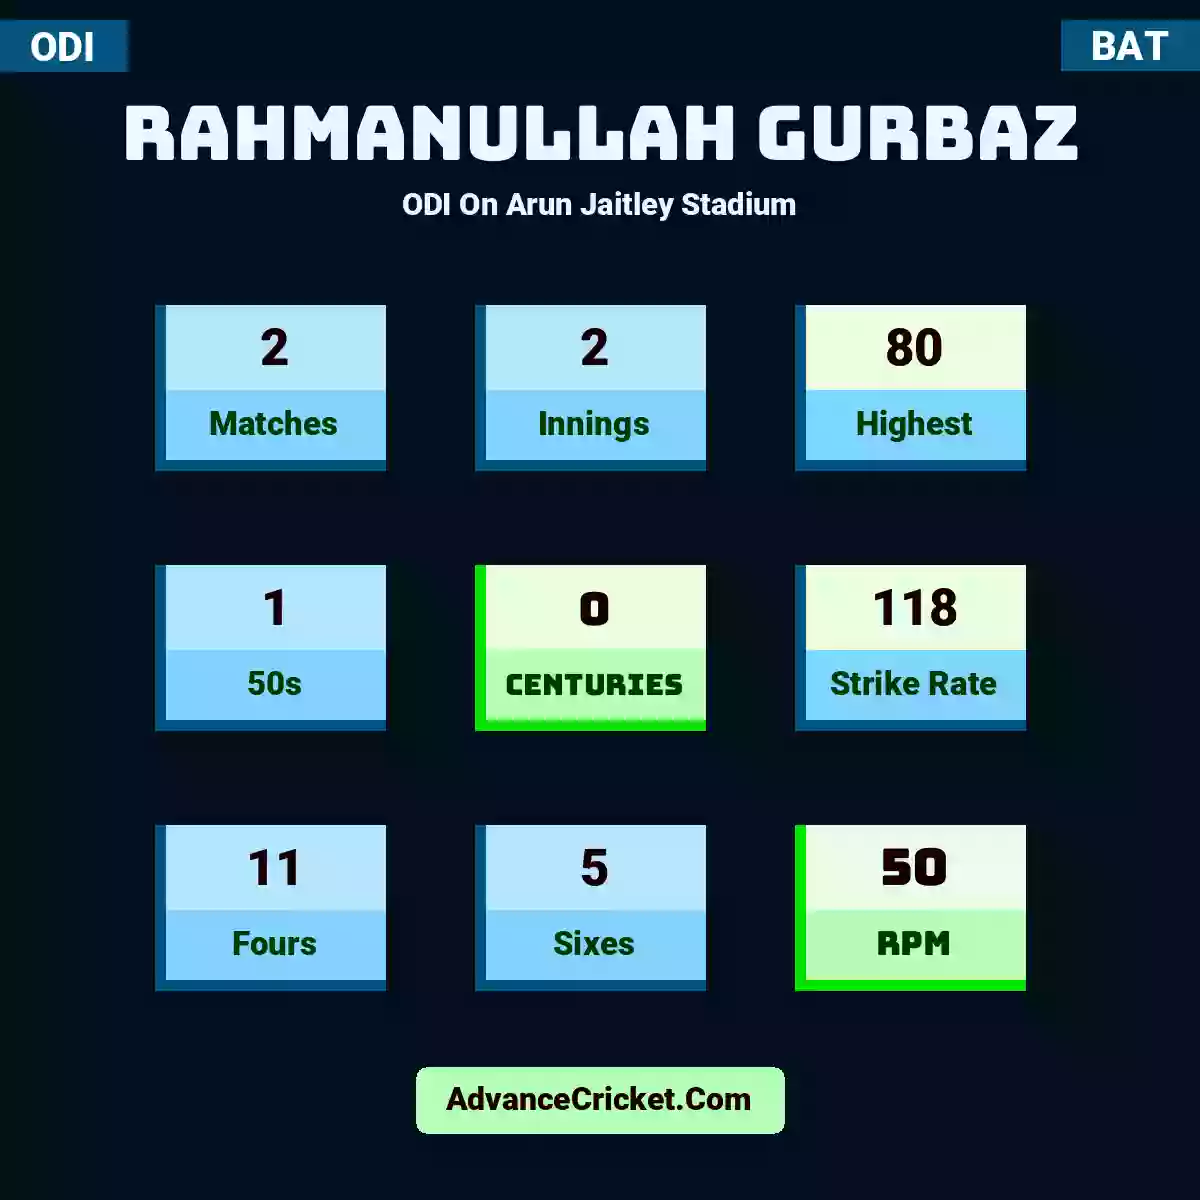 Rahmanullah Gurbaz ODI  On Arun Jaitley Stadium, Rahmanullah Gurbaz played 2 matches, scored 80 runs as highest, 1 half-centuries, and 0 centuries, with a strike rate of 118. R.Gurbaz hit 11 fours and 5 sixes, with an RPM of 50.